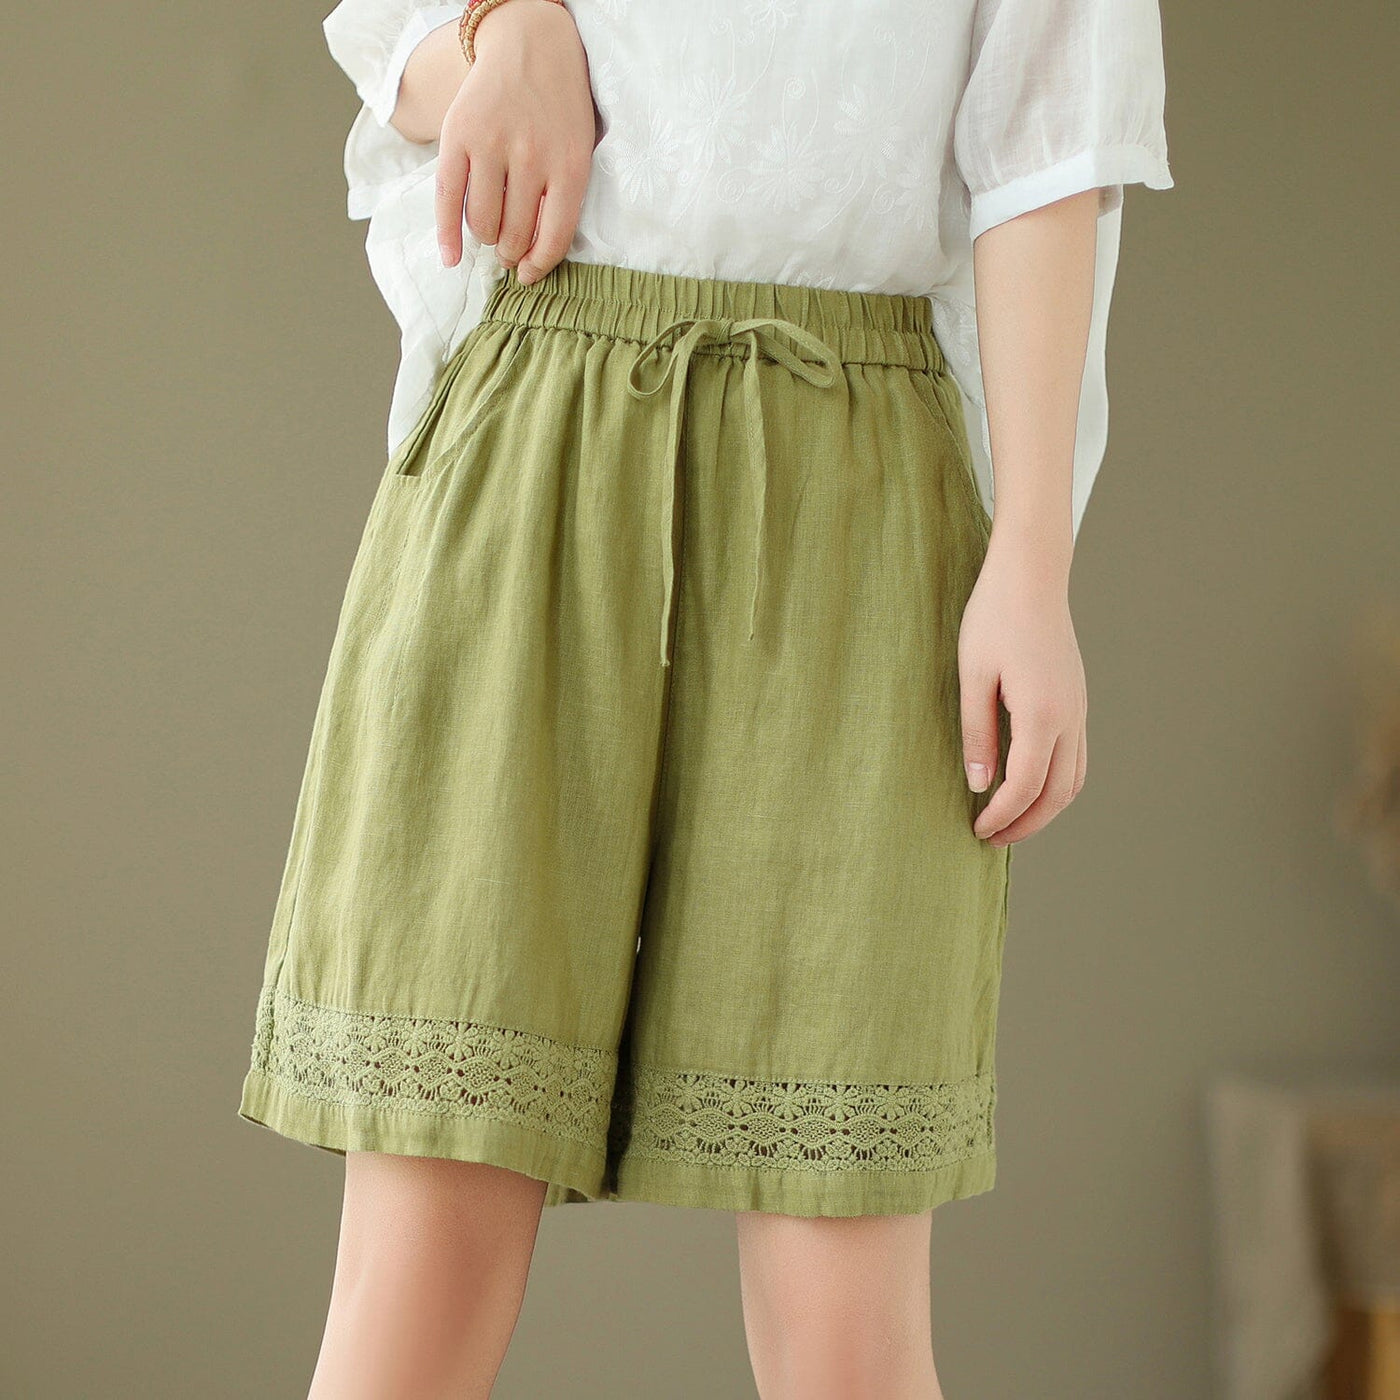 Women Summer Linen Embroidery Hollow Loose Shorts